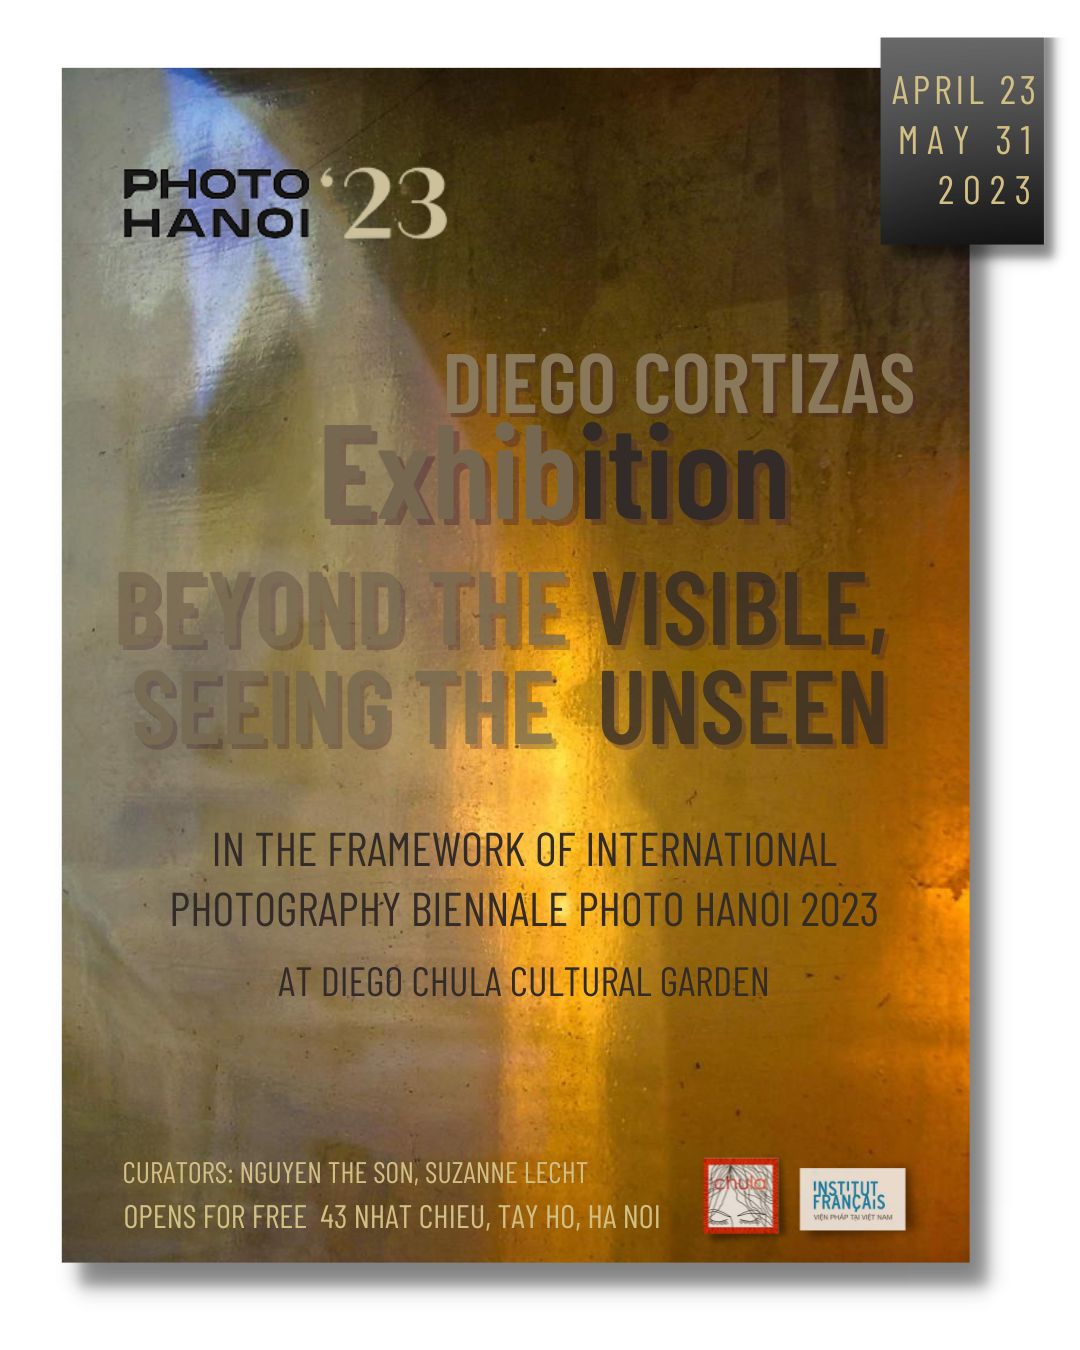 Sunday April 23th - Diego Cortizas photo exhibition